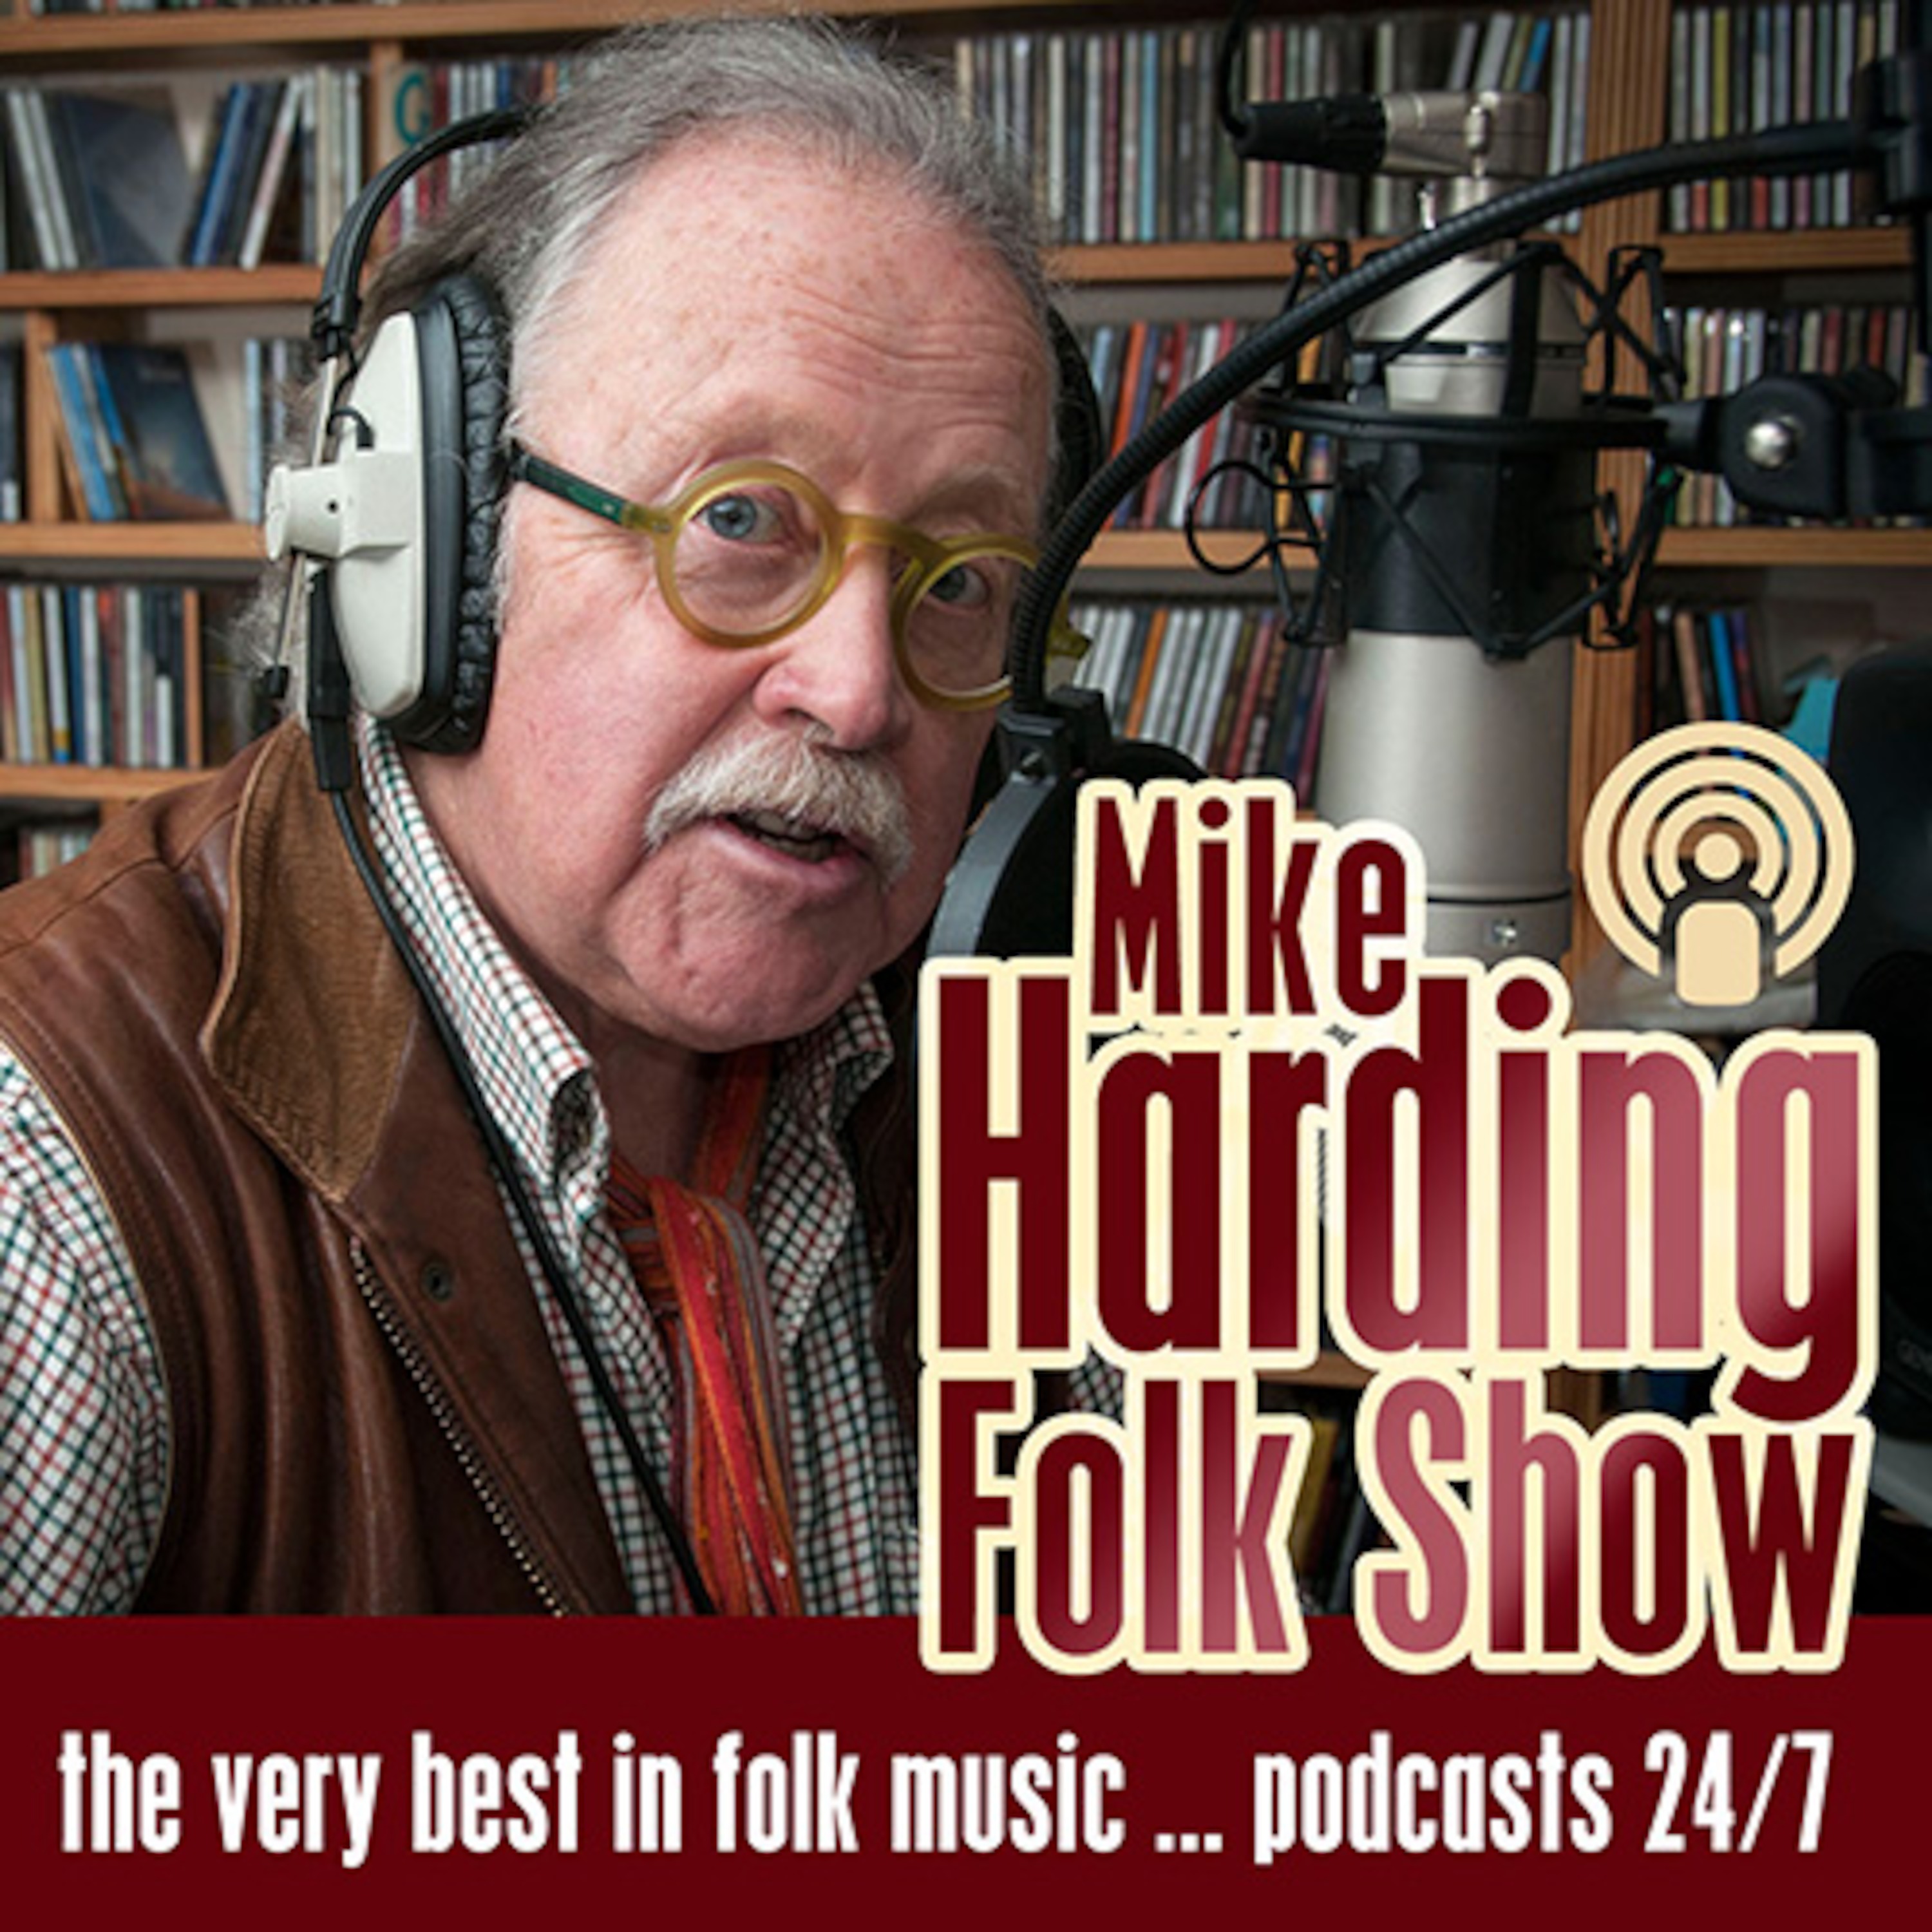 Mike Harding Folk Show 205